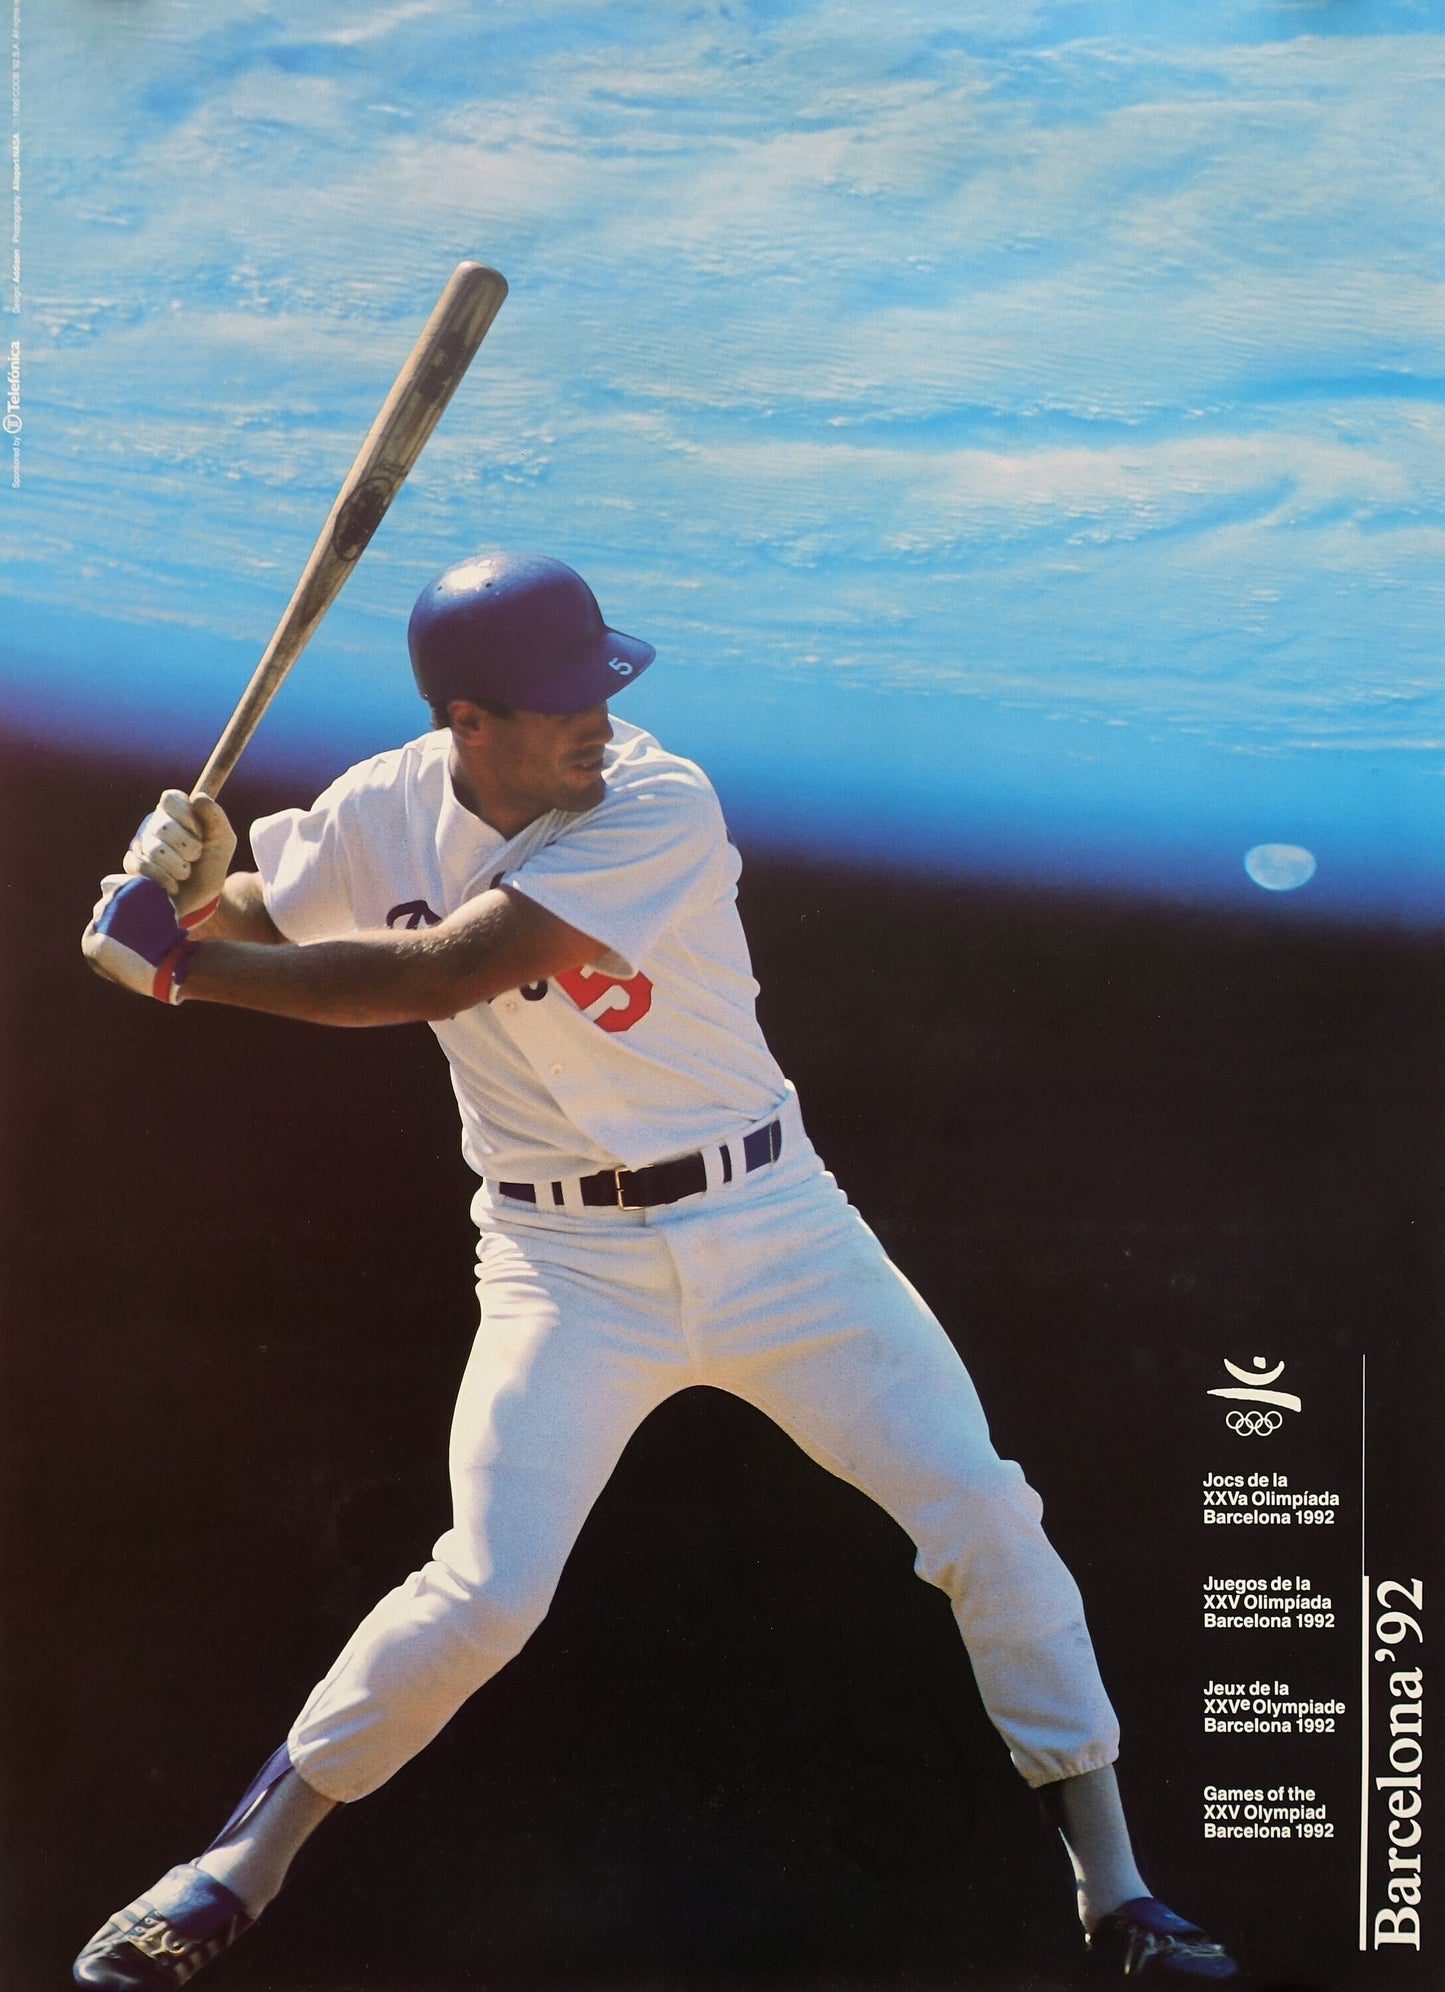 1992 Summer Olympic Games Barcelona Baseball - Original Vintage Poster